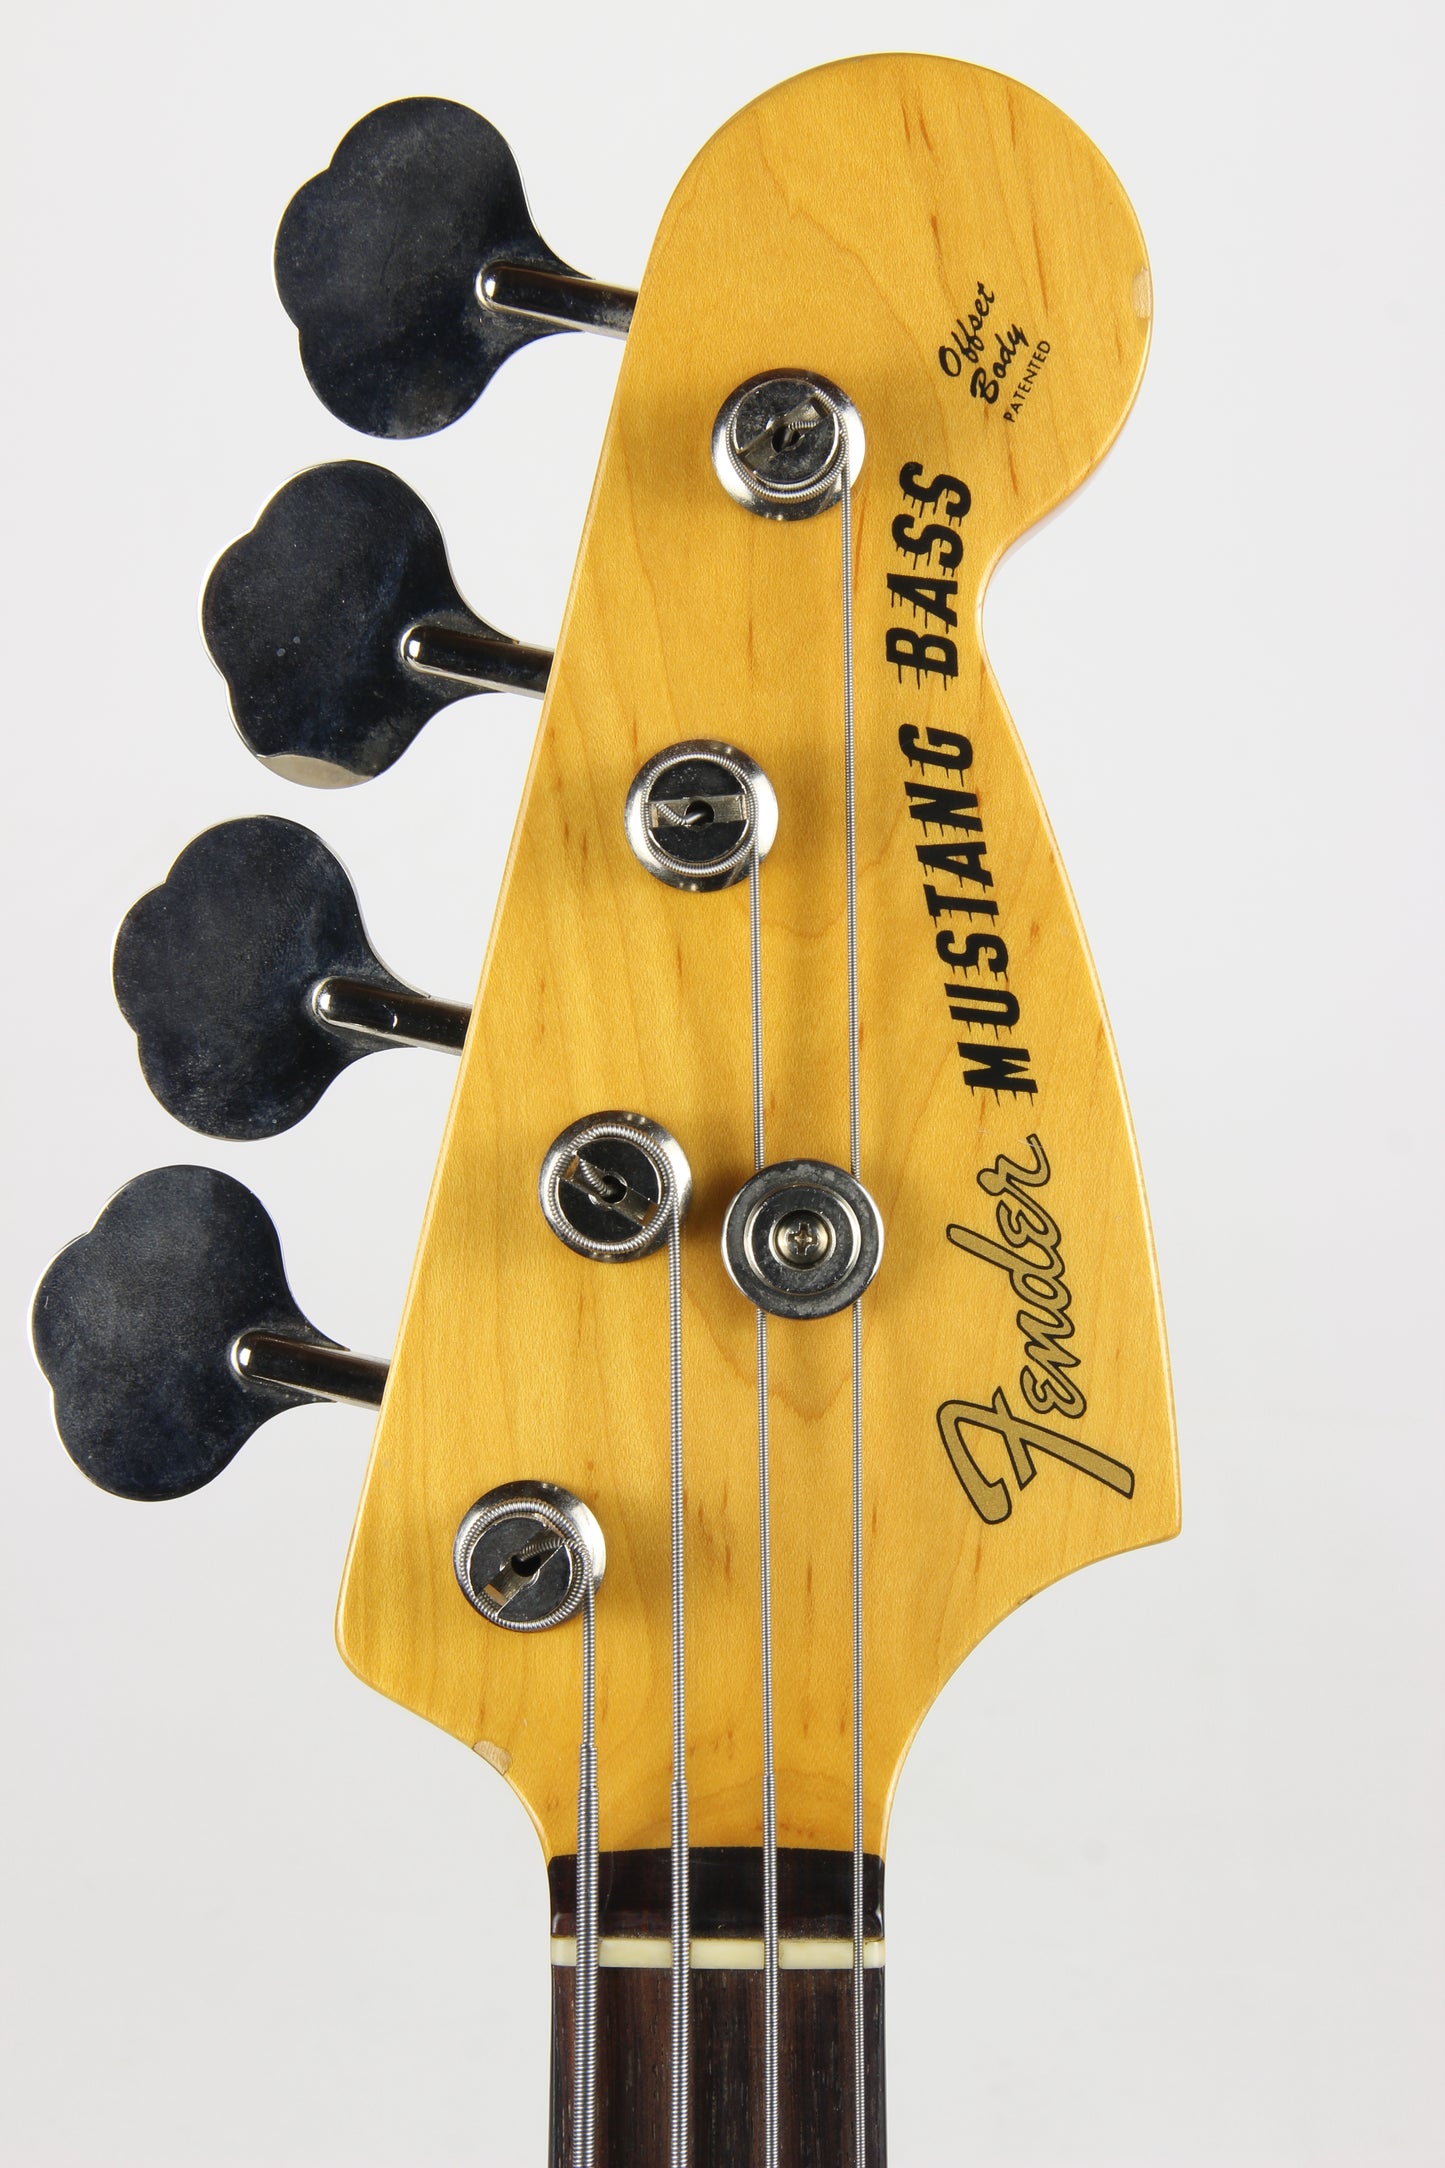 2004 Fender Japan Mustang Bass Olympic White - CIJ Shortscale Vintage Reissue MB-98